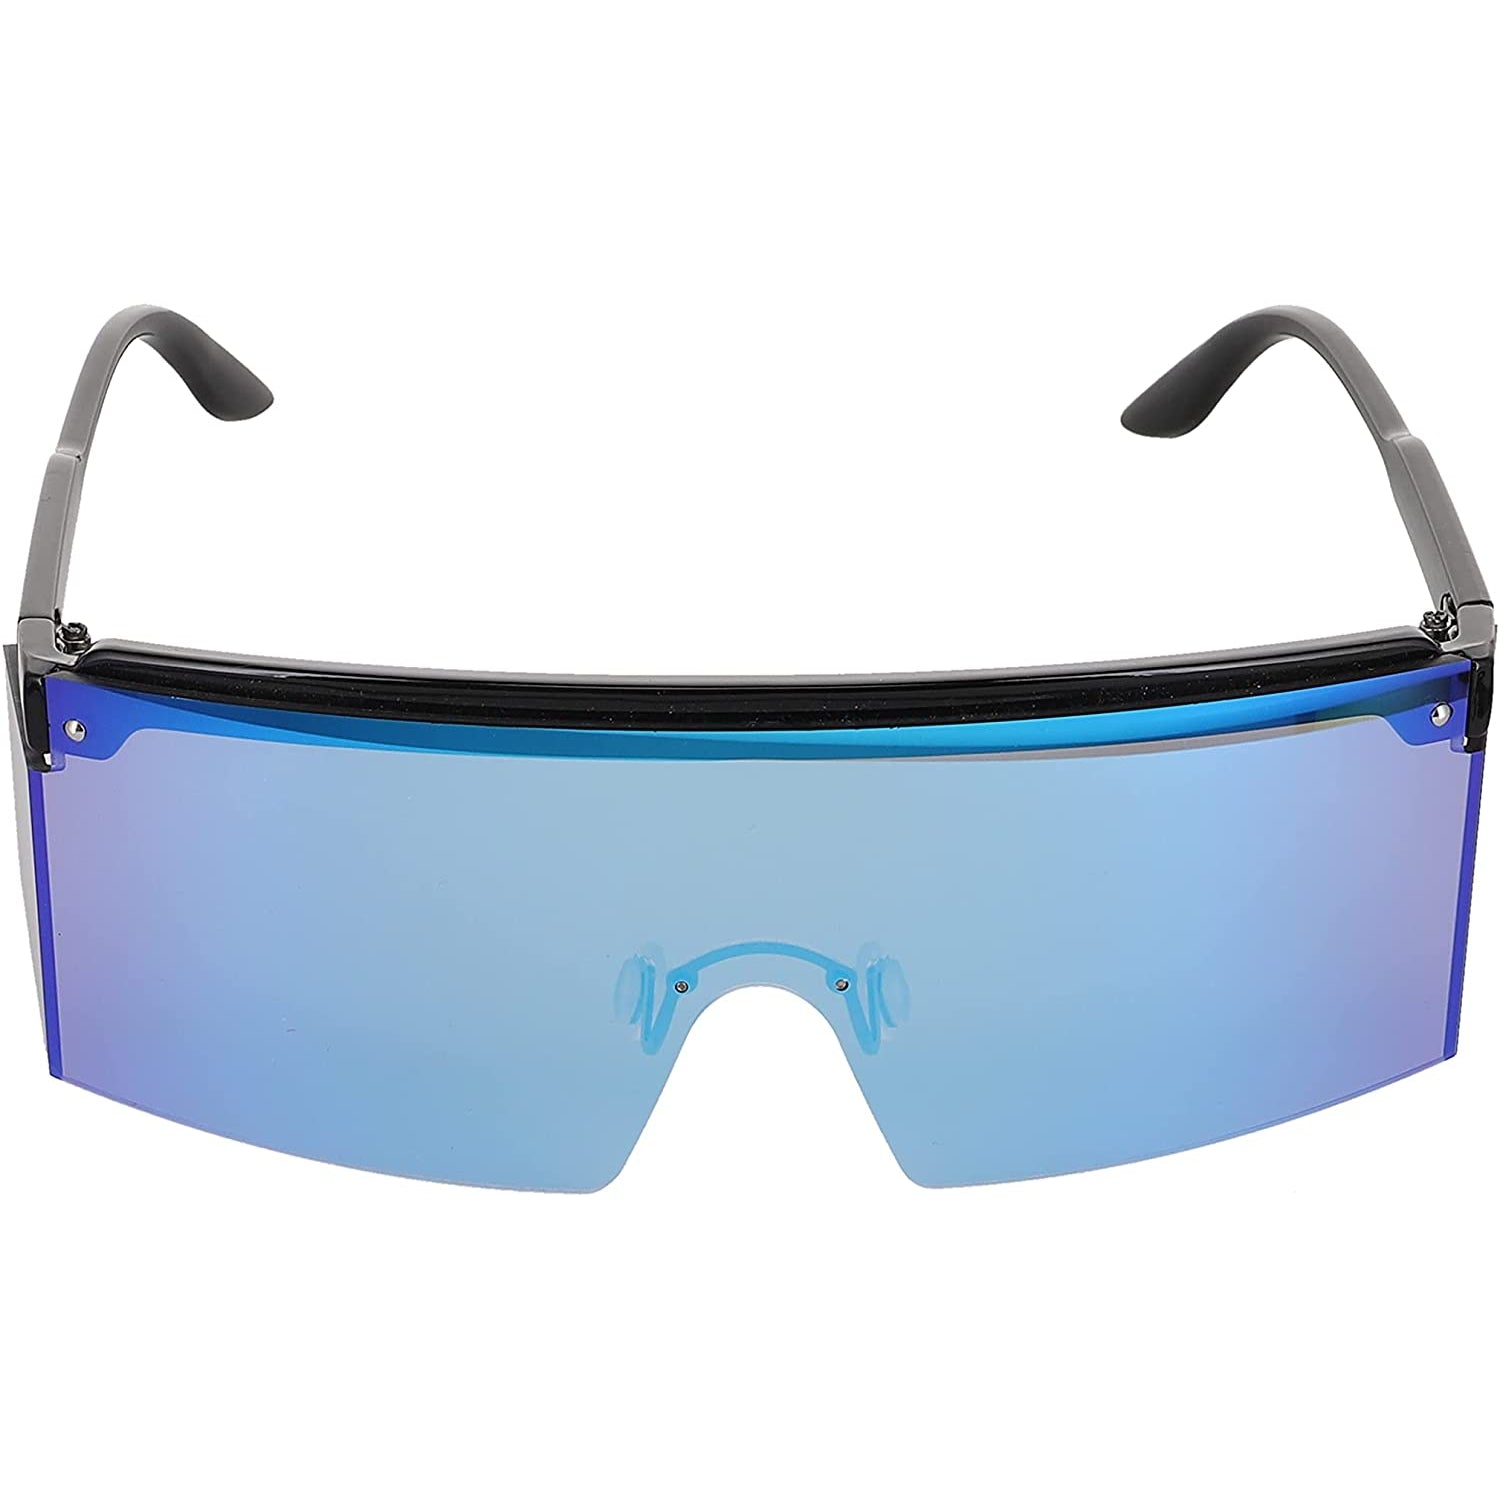 zeroUV Sleek Oversize Flat Top Shield Sunglasses